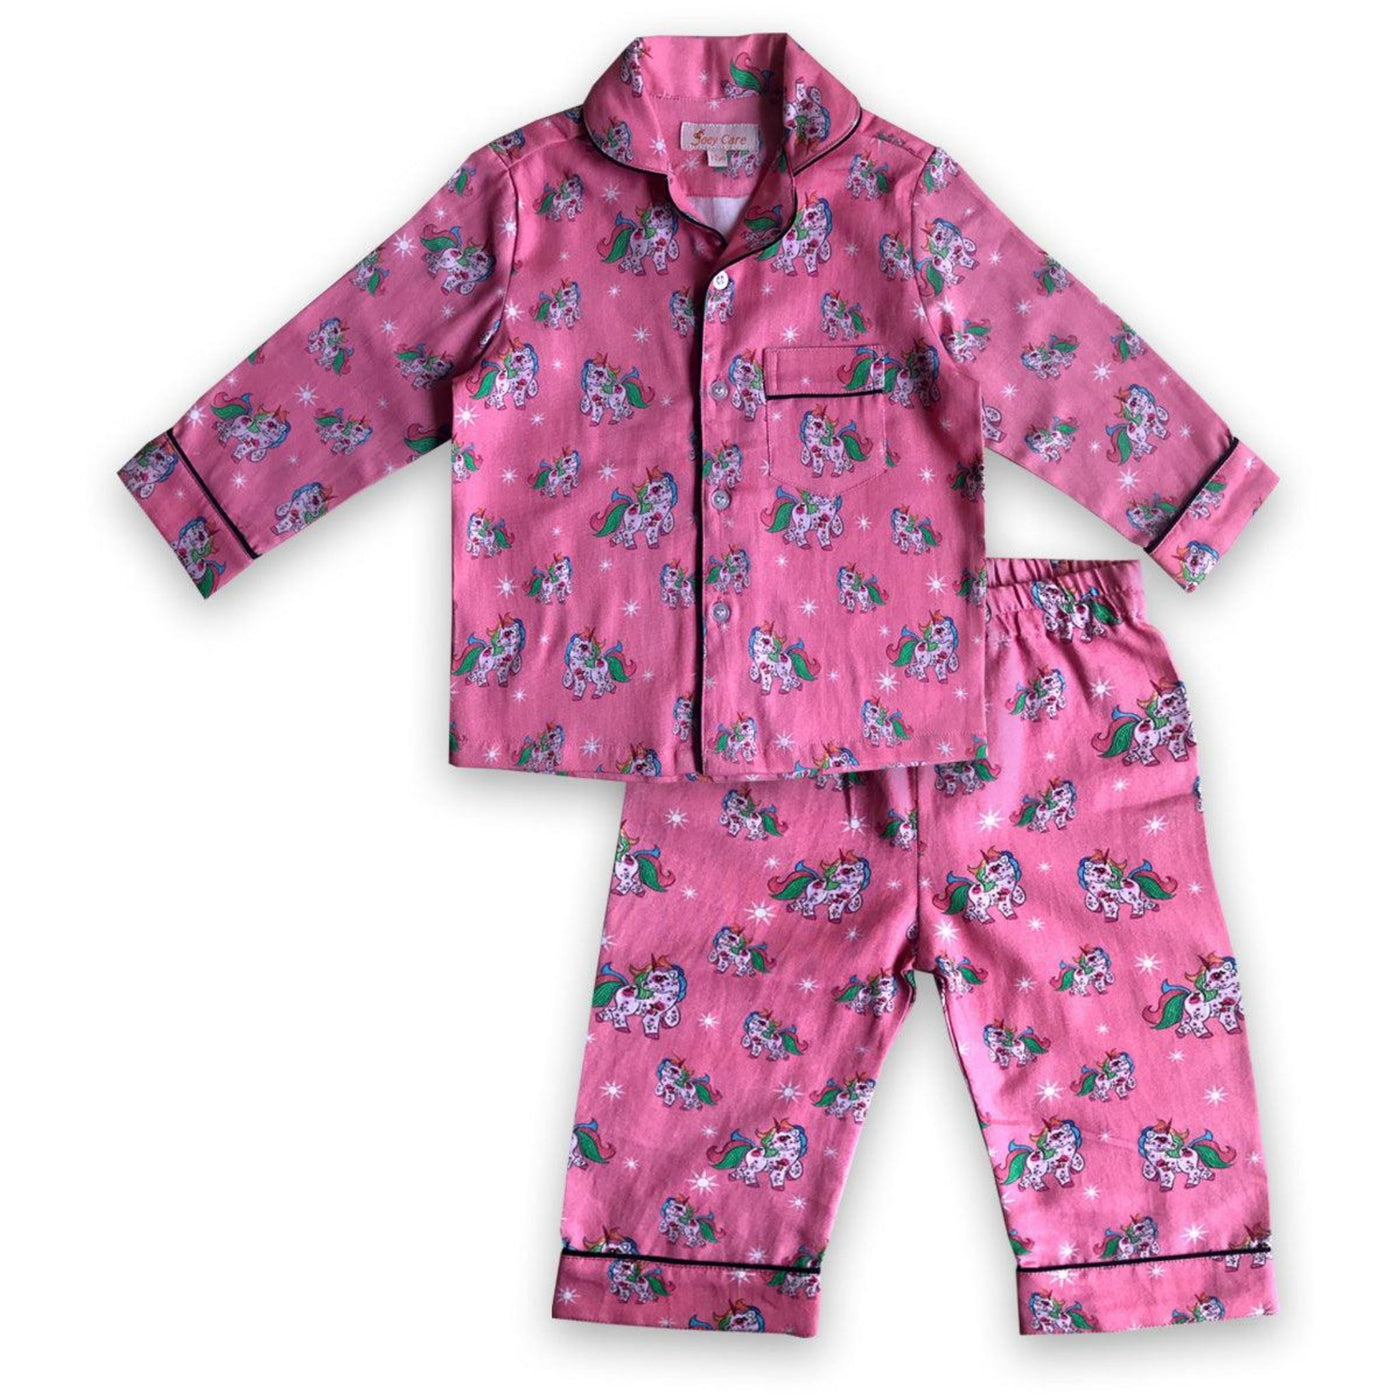 Pocket Nightwear for Girls and Boys - Pink unicorn Joeycare 